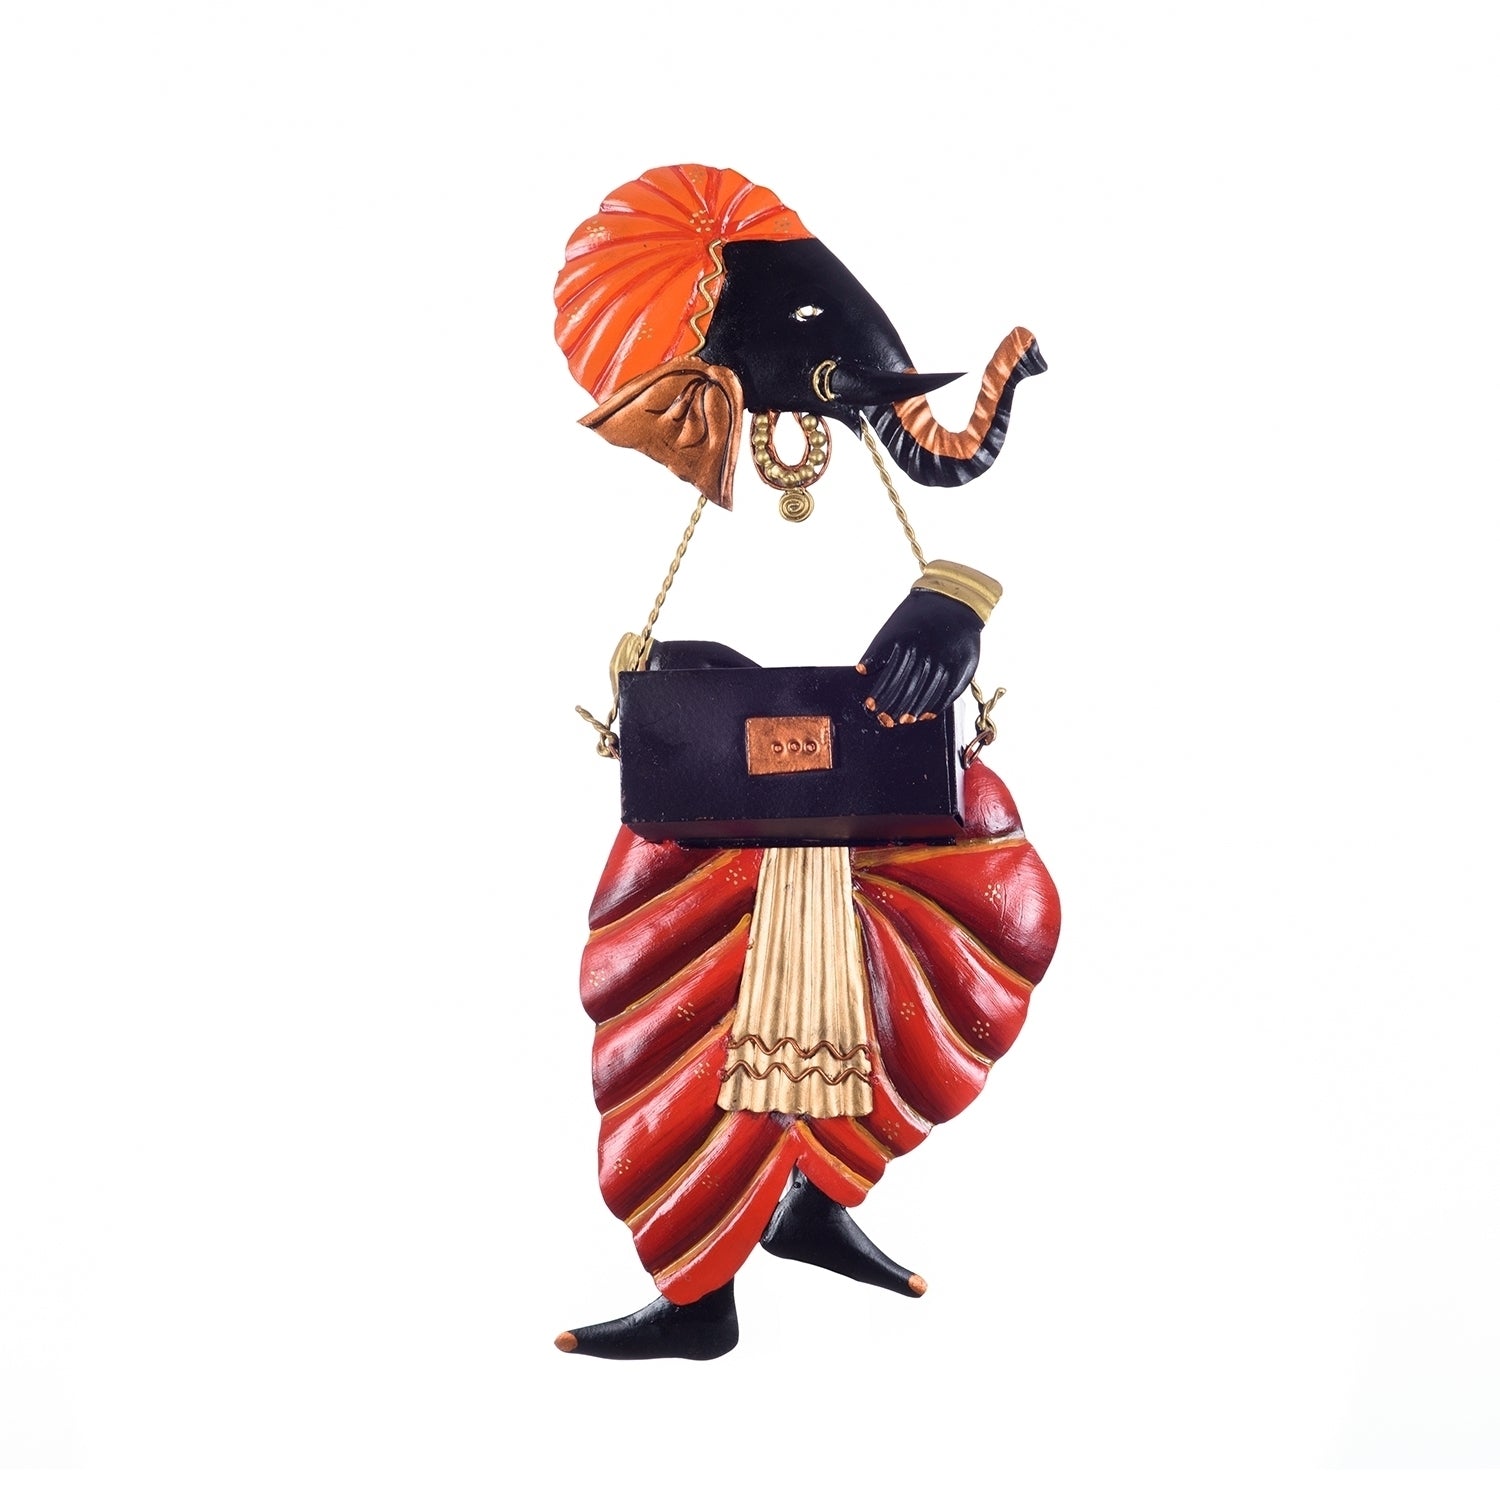 Orange and Black Wrought Iron Lord Ganesha playing Harmonium Wall Hanging 1